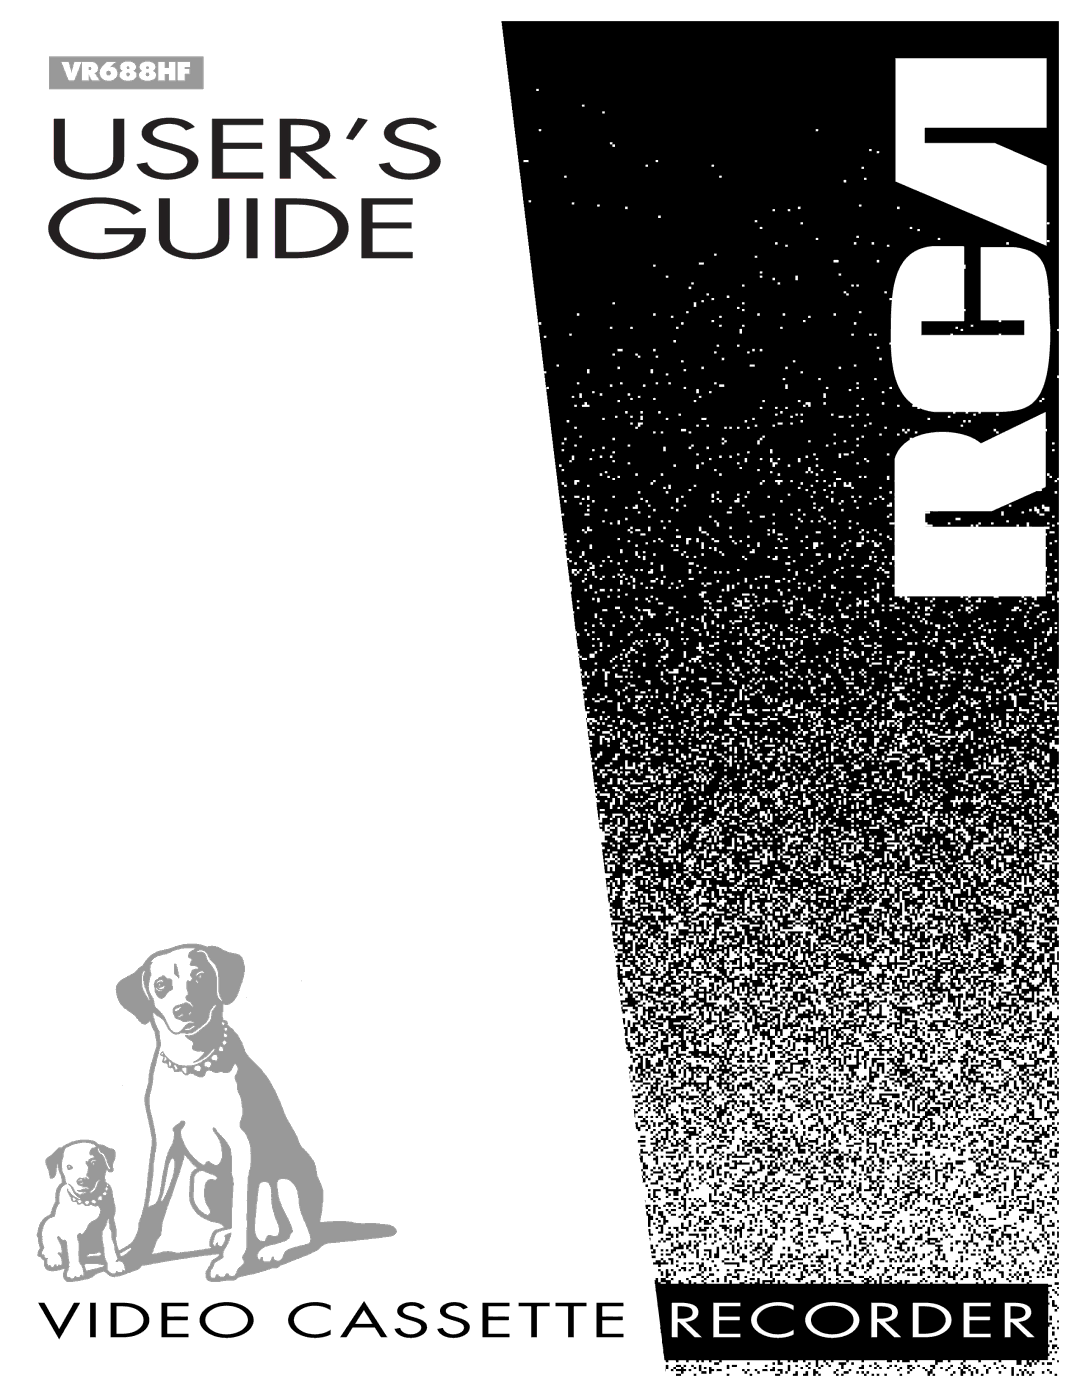 RCA VR688HF manual USER’S Guide 